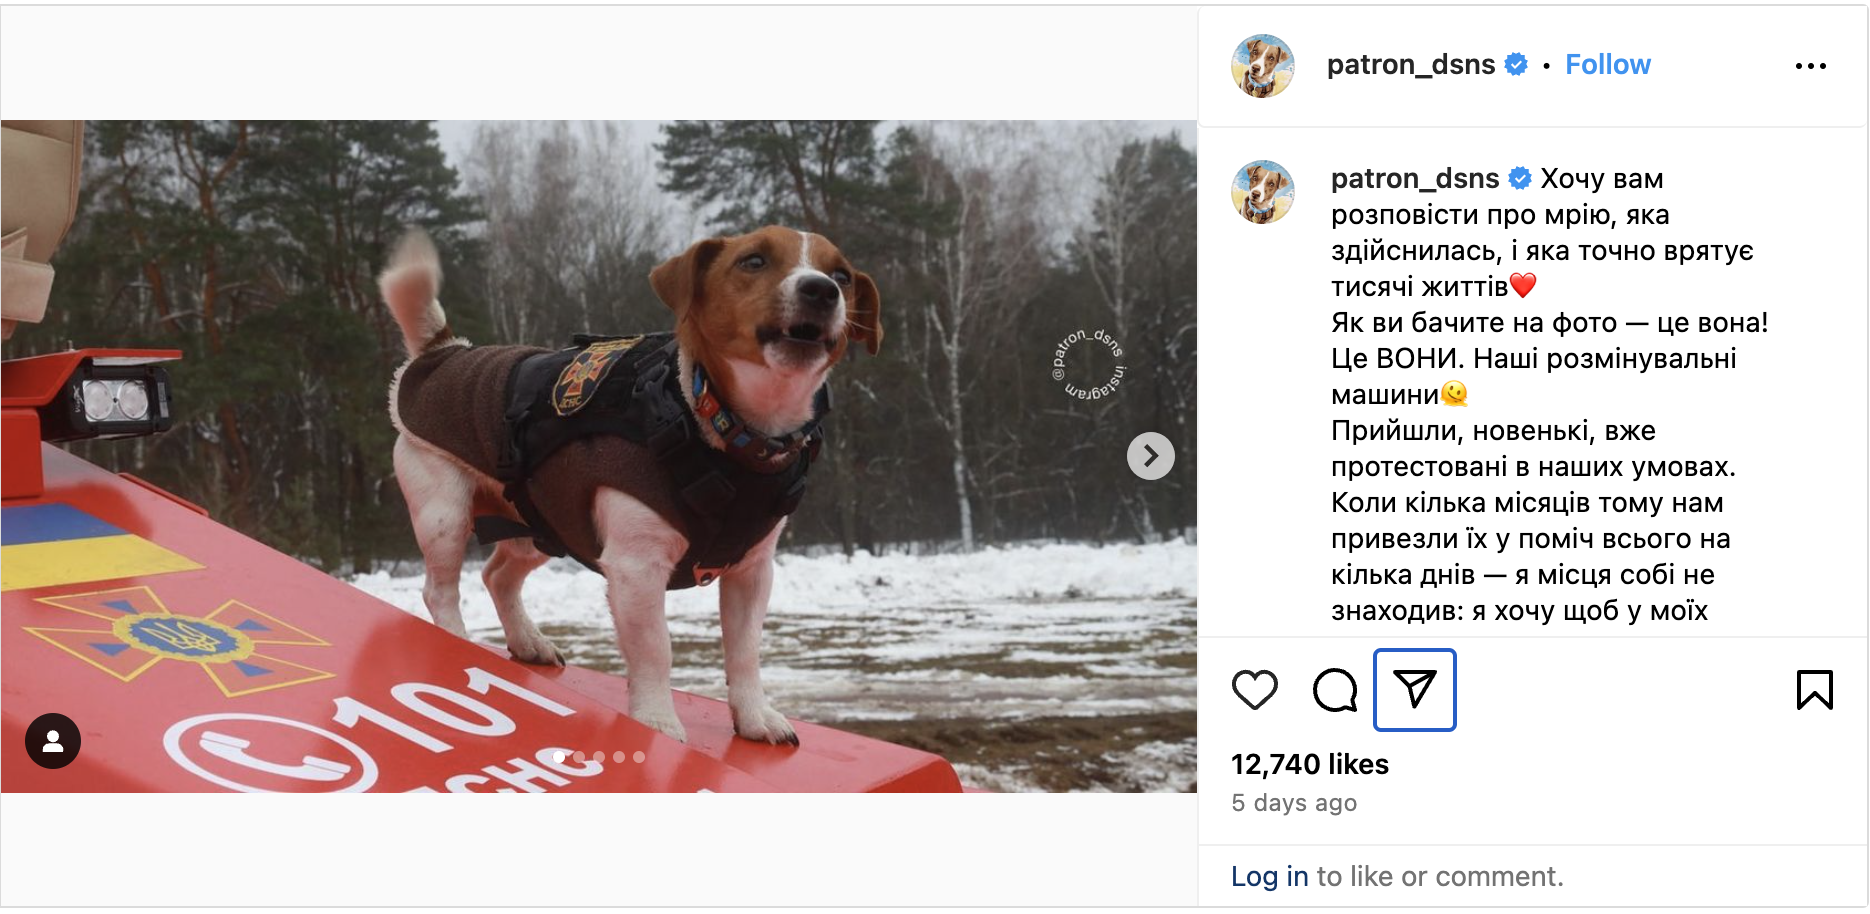 A screen shot of Patron the Ukrainian sapper dog standing on a new red demining machine.